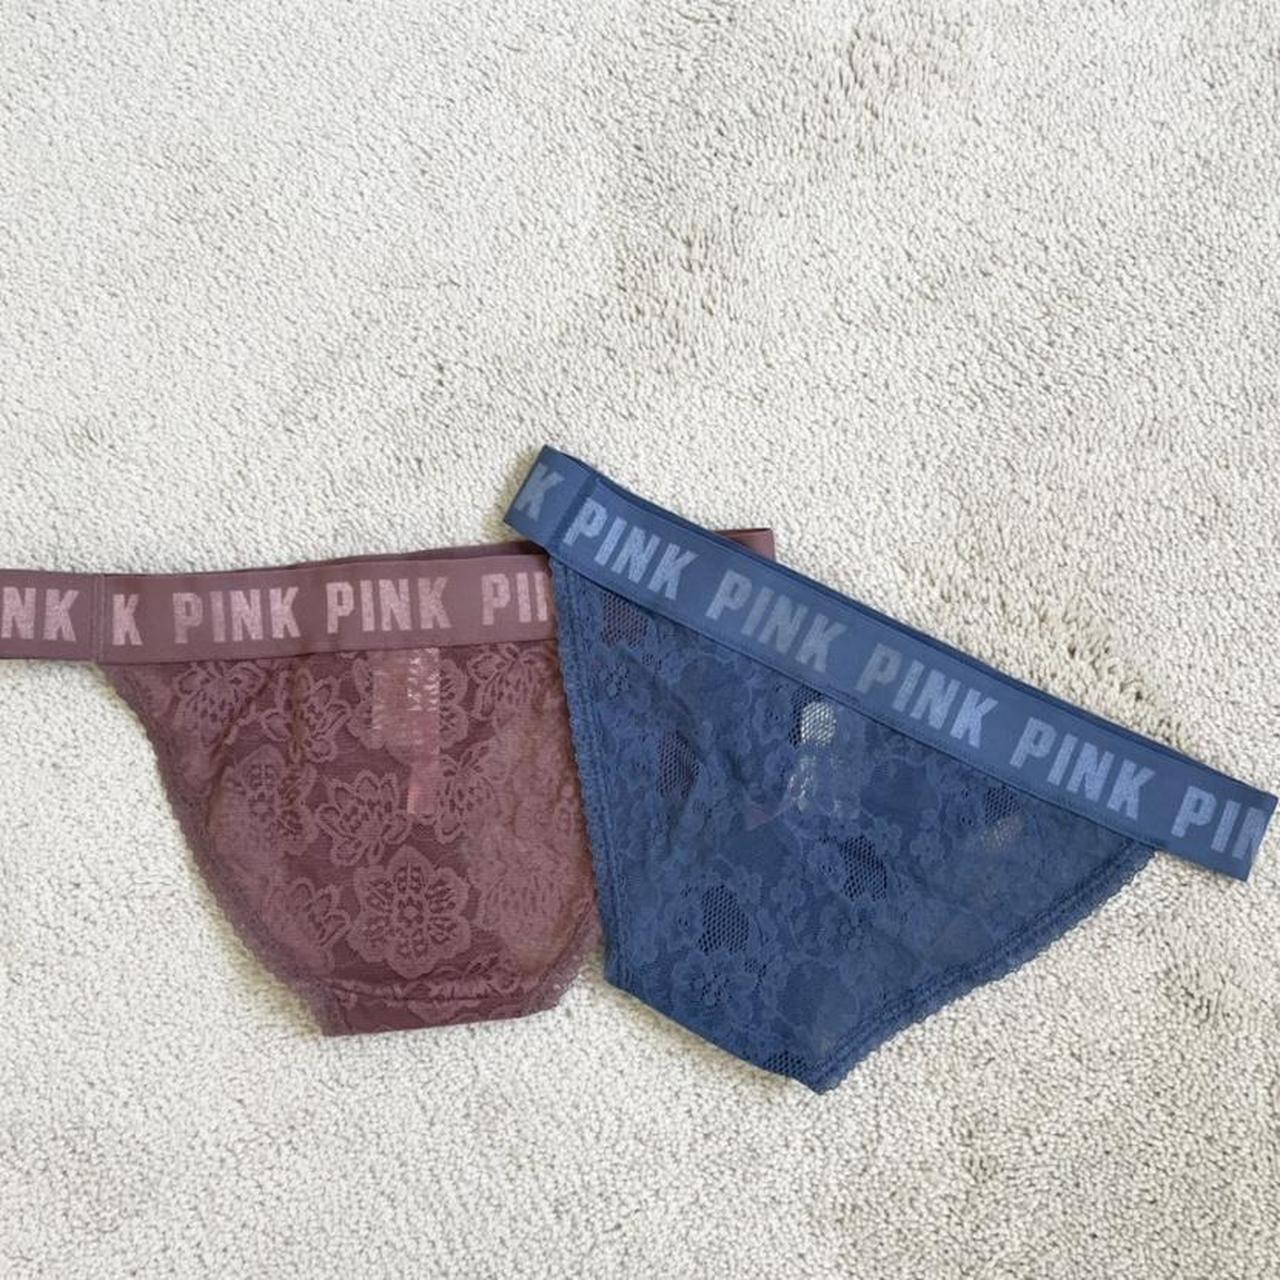 Victoria’s Secret PINK lace panty set , Size small.